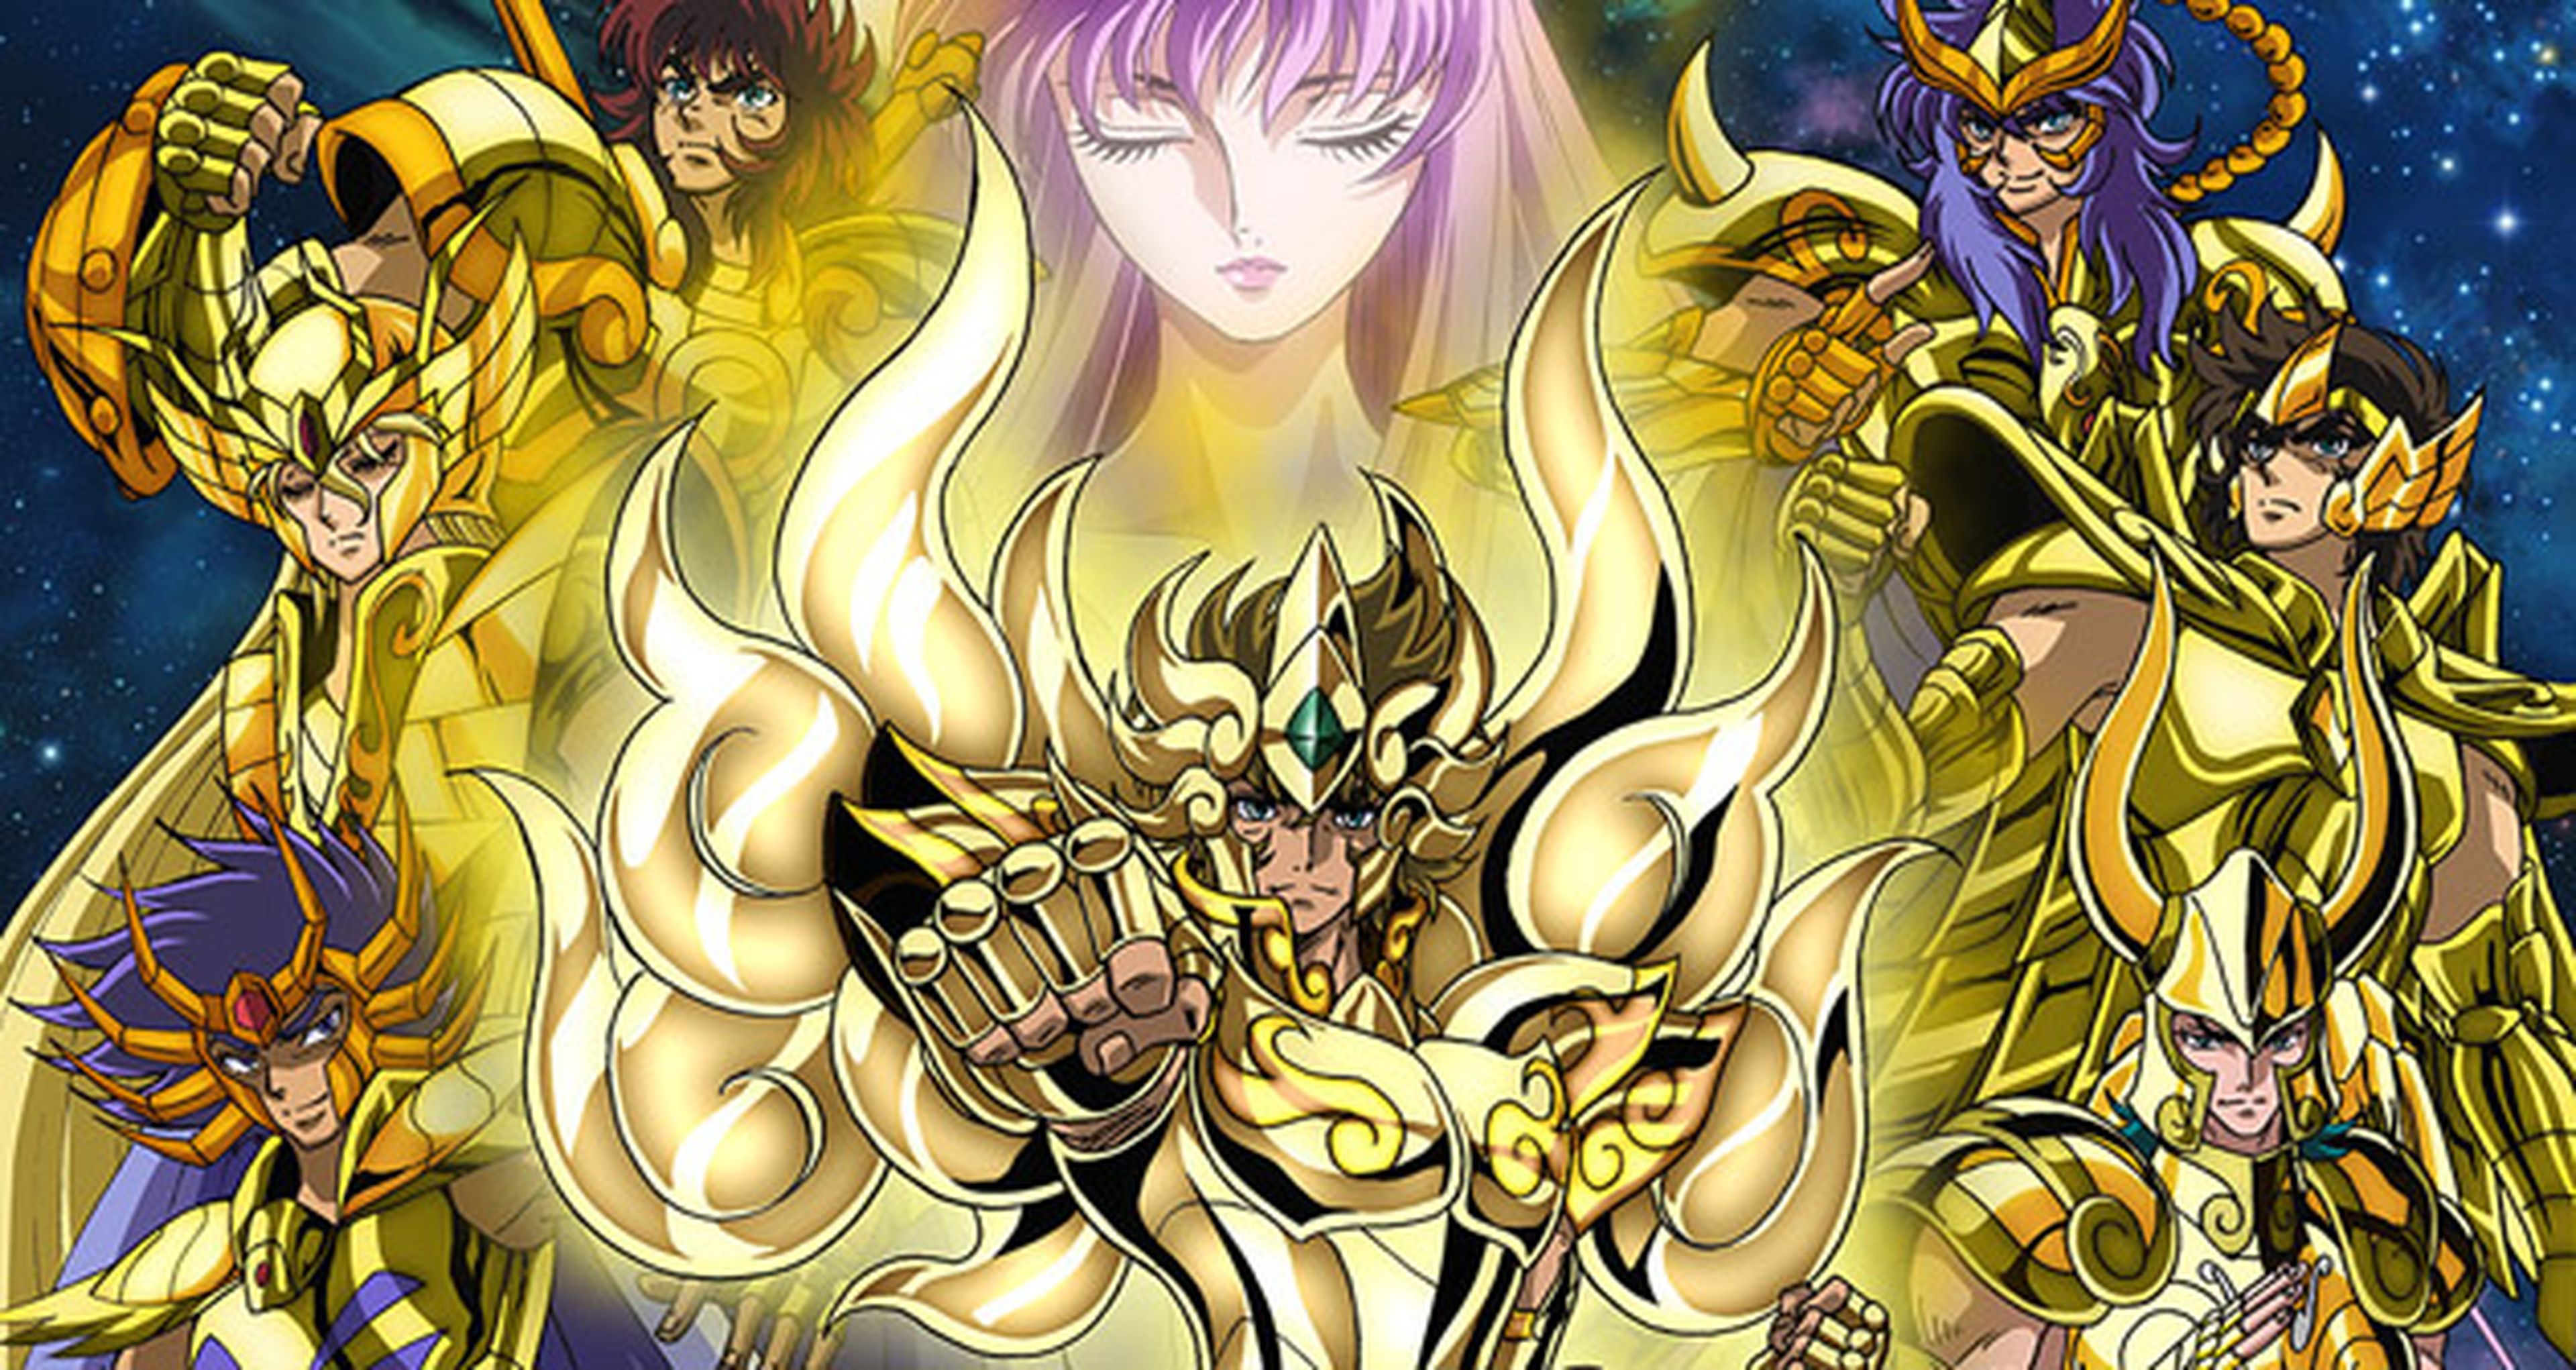 Saint Seiya: Soul of Gold - Capítulo 8 - Sub Español  Saint Seiya: Soul of  Gold - Capítulo 8 - Sub Español Creditos: www.daisuki.net Idea Original:  Masami Kurumada & Toshimitsu Takeuchi #